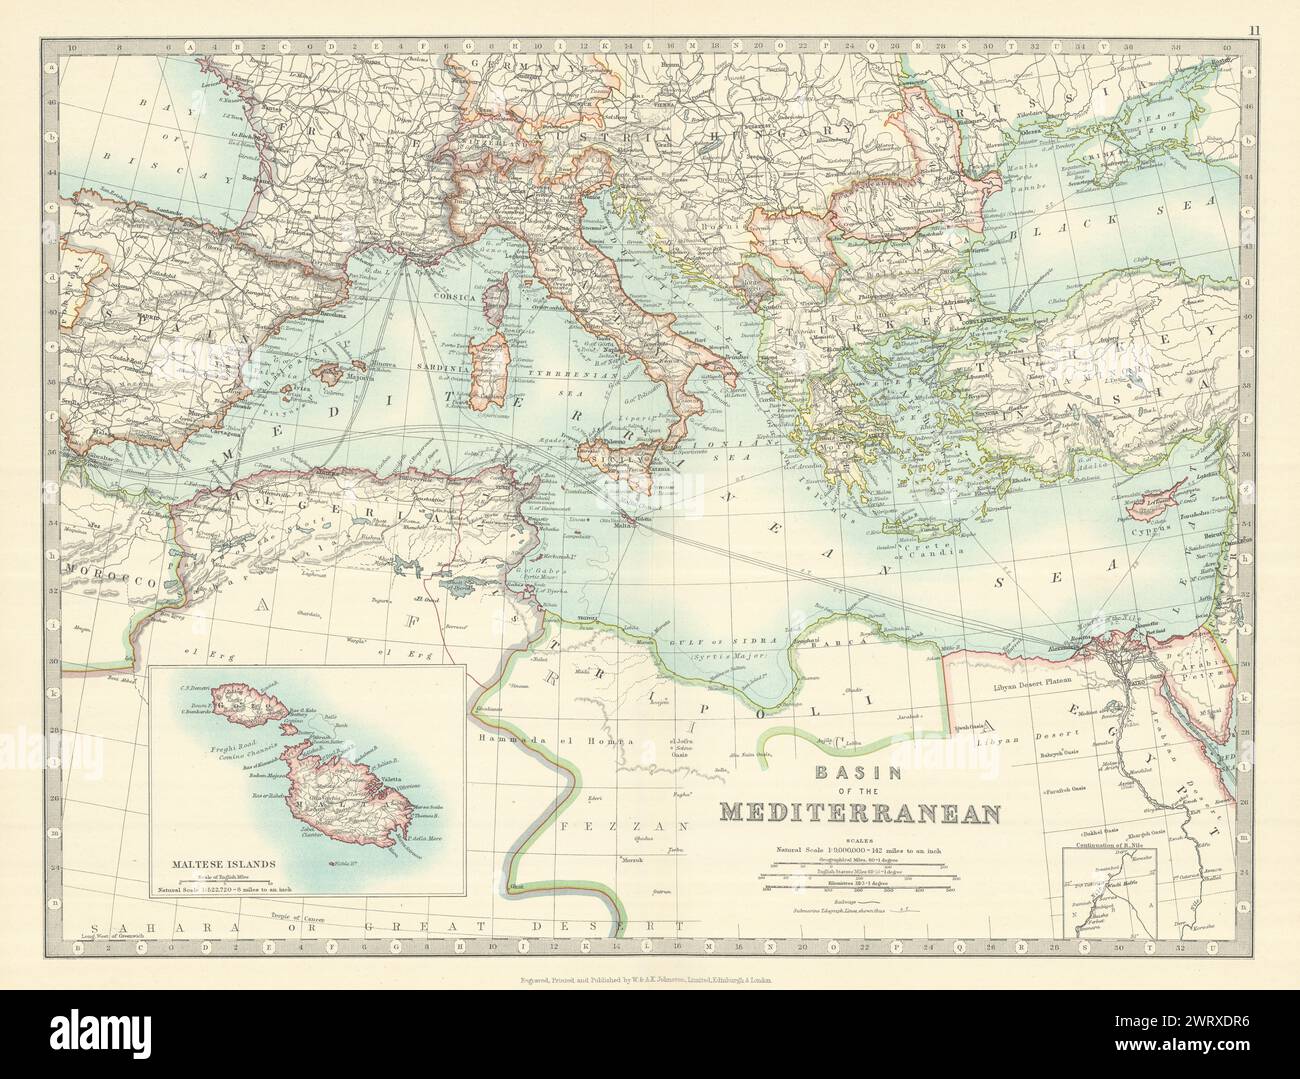 MEDITERRANEAN SEA. Submarine cables. Railways. JOHNSTON 1913 old antique map Stock Photo